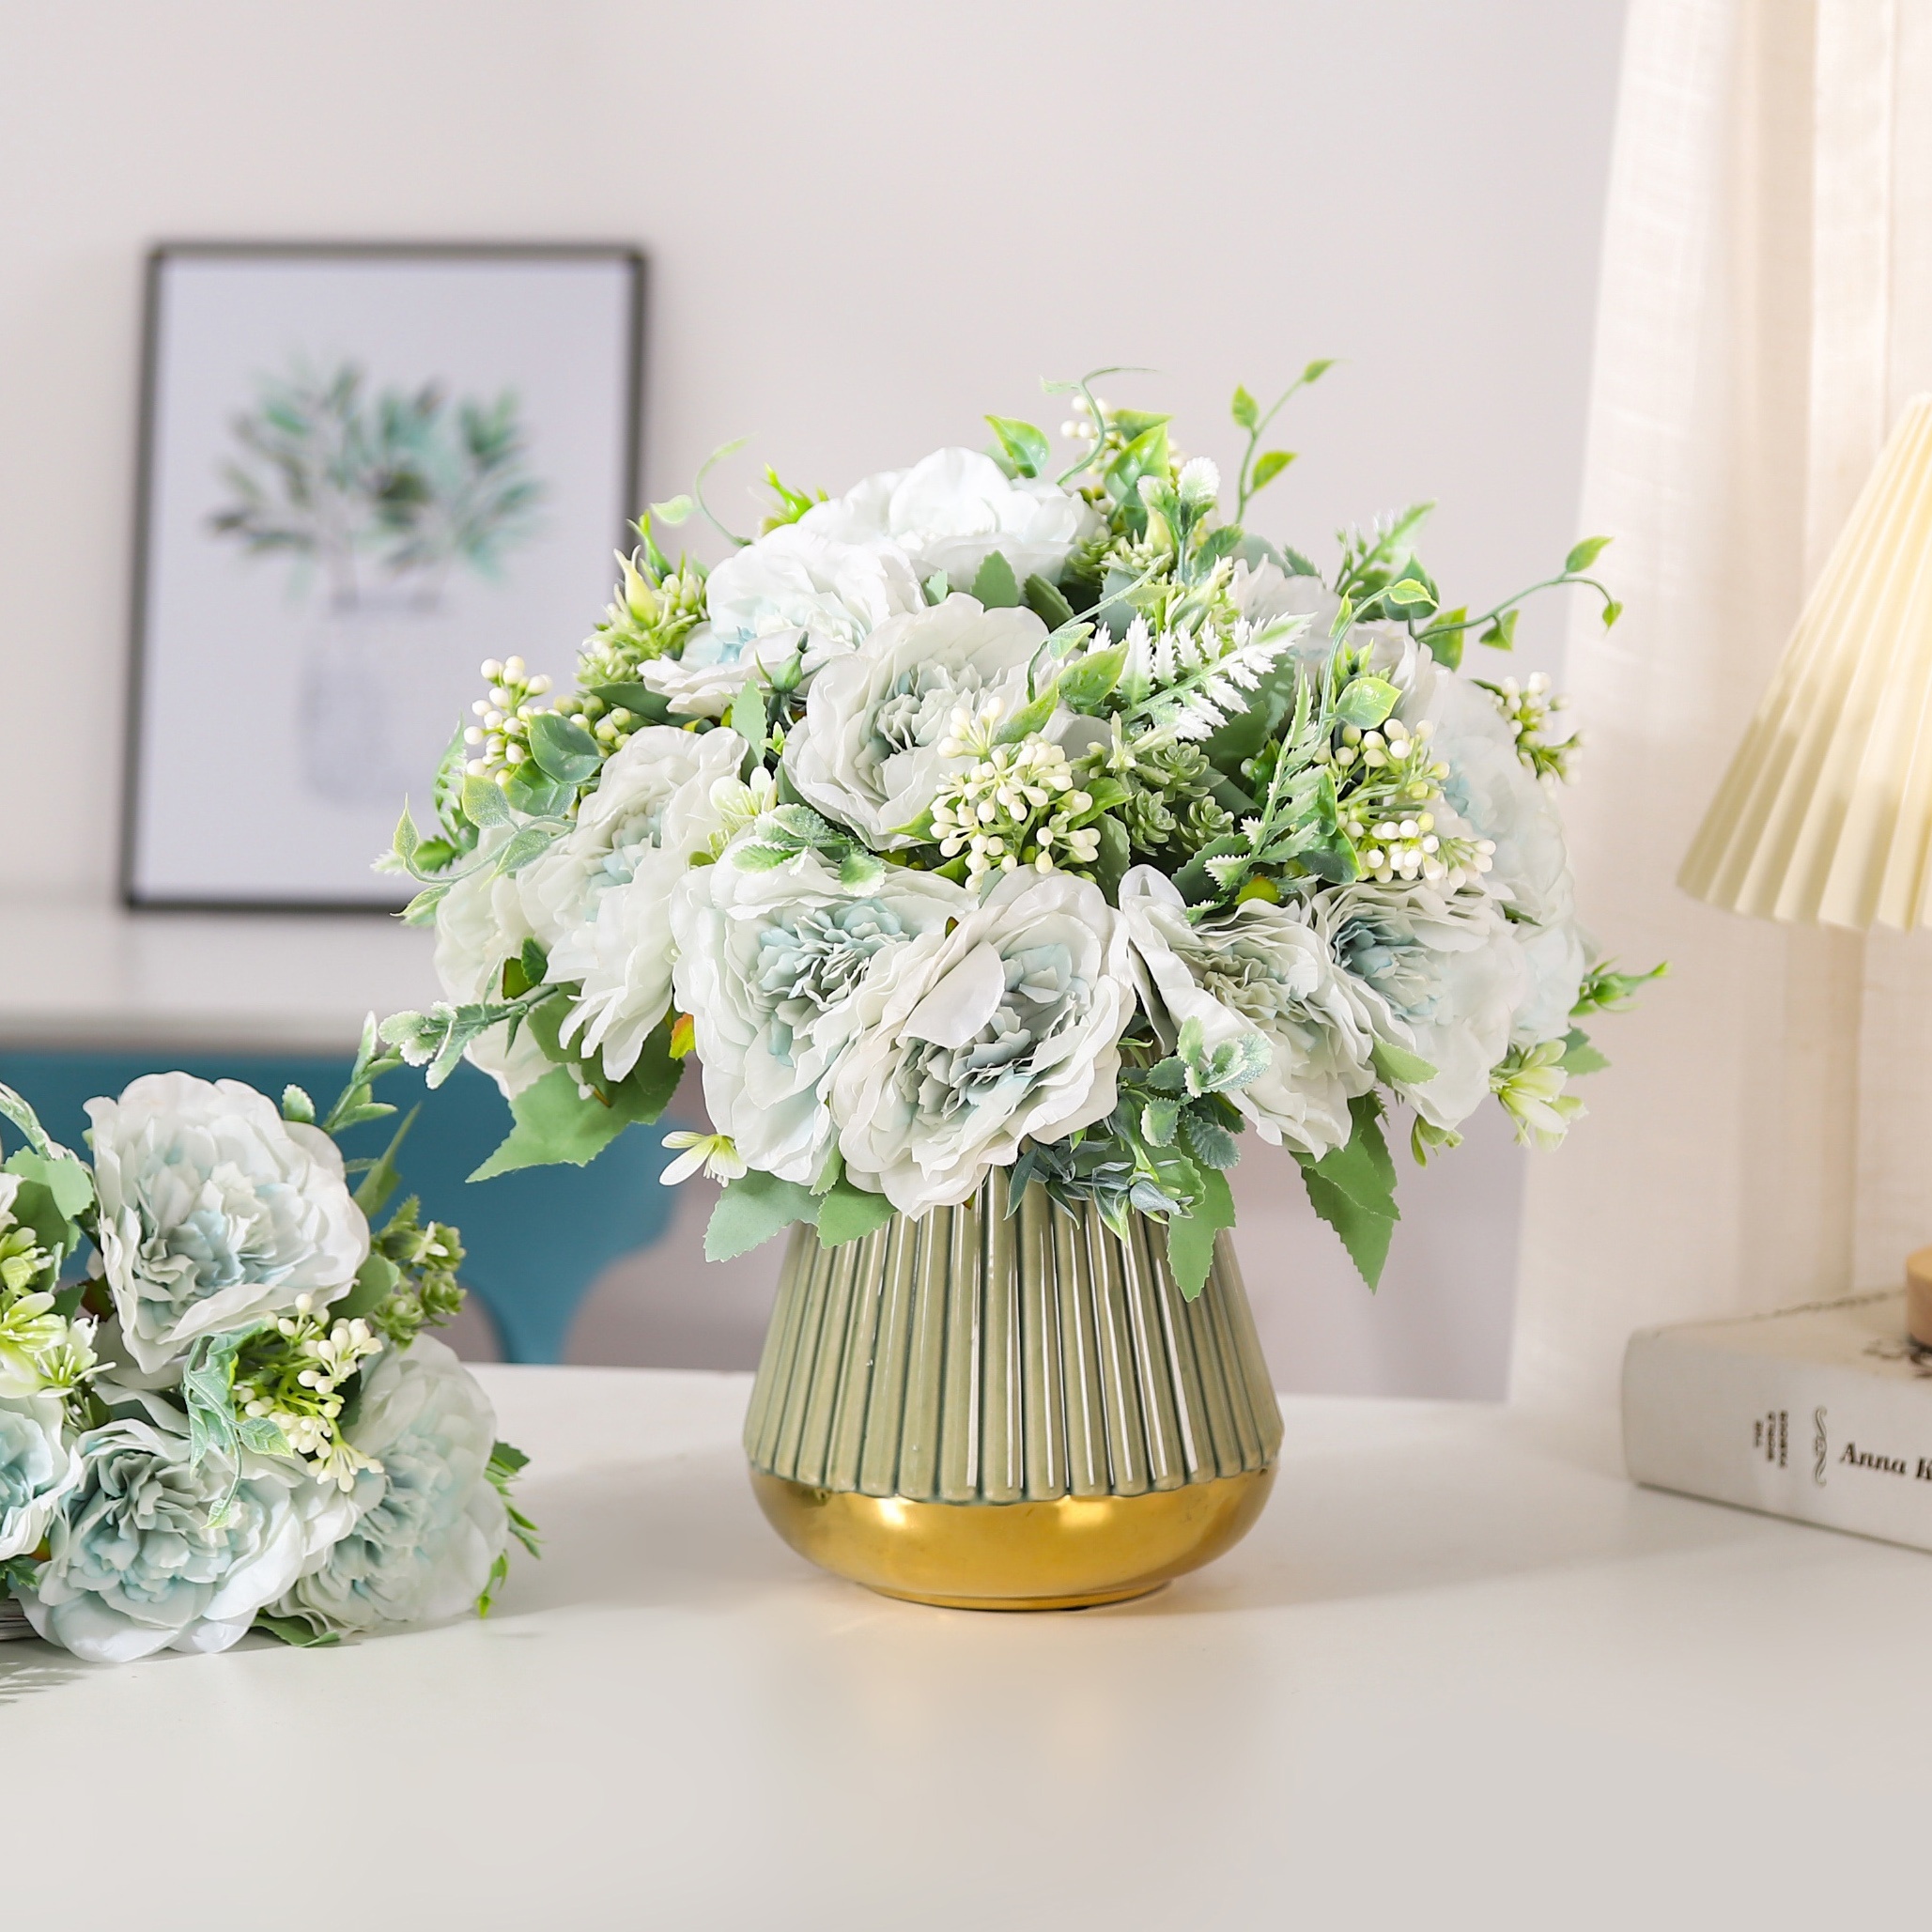 winter white artificial flowers arrangement in glass vase. Faux